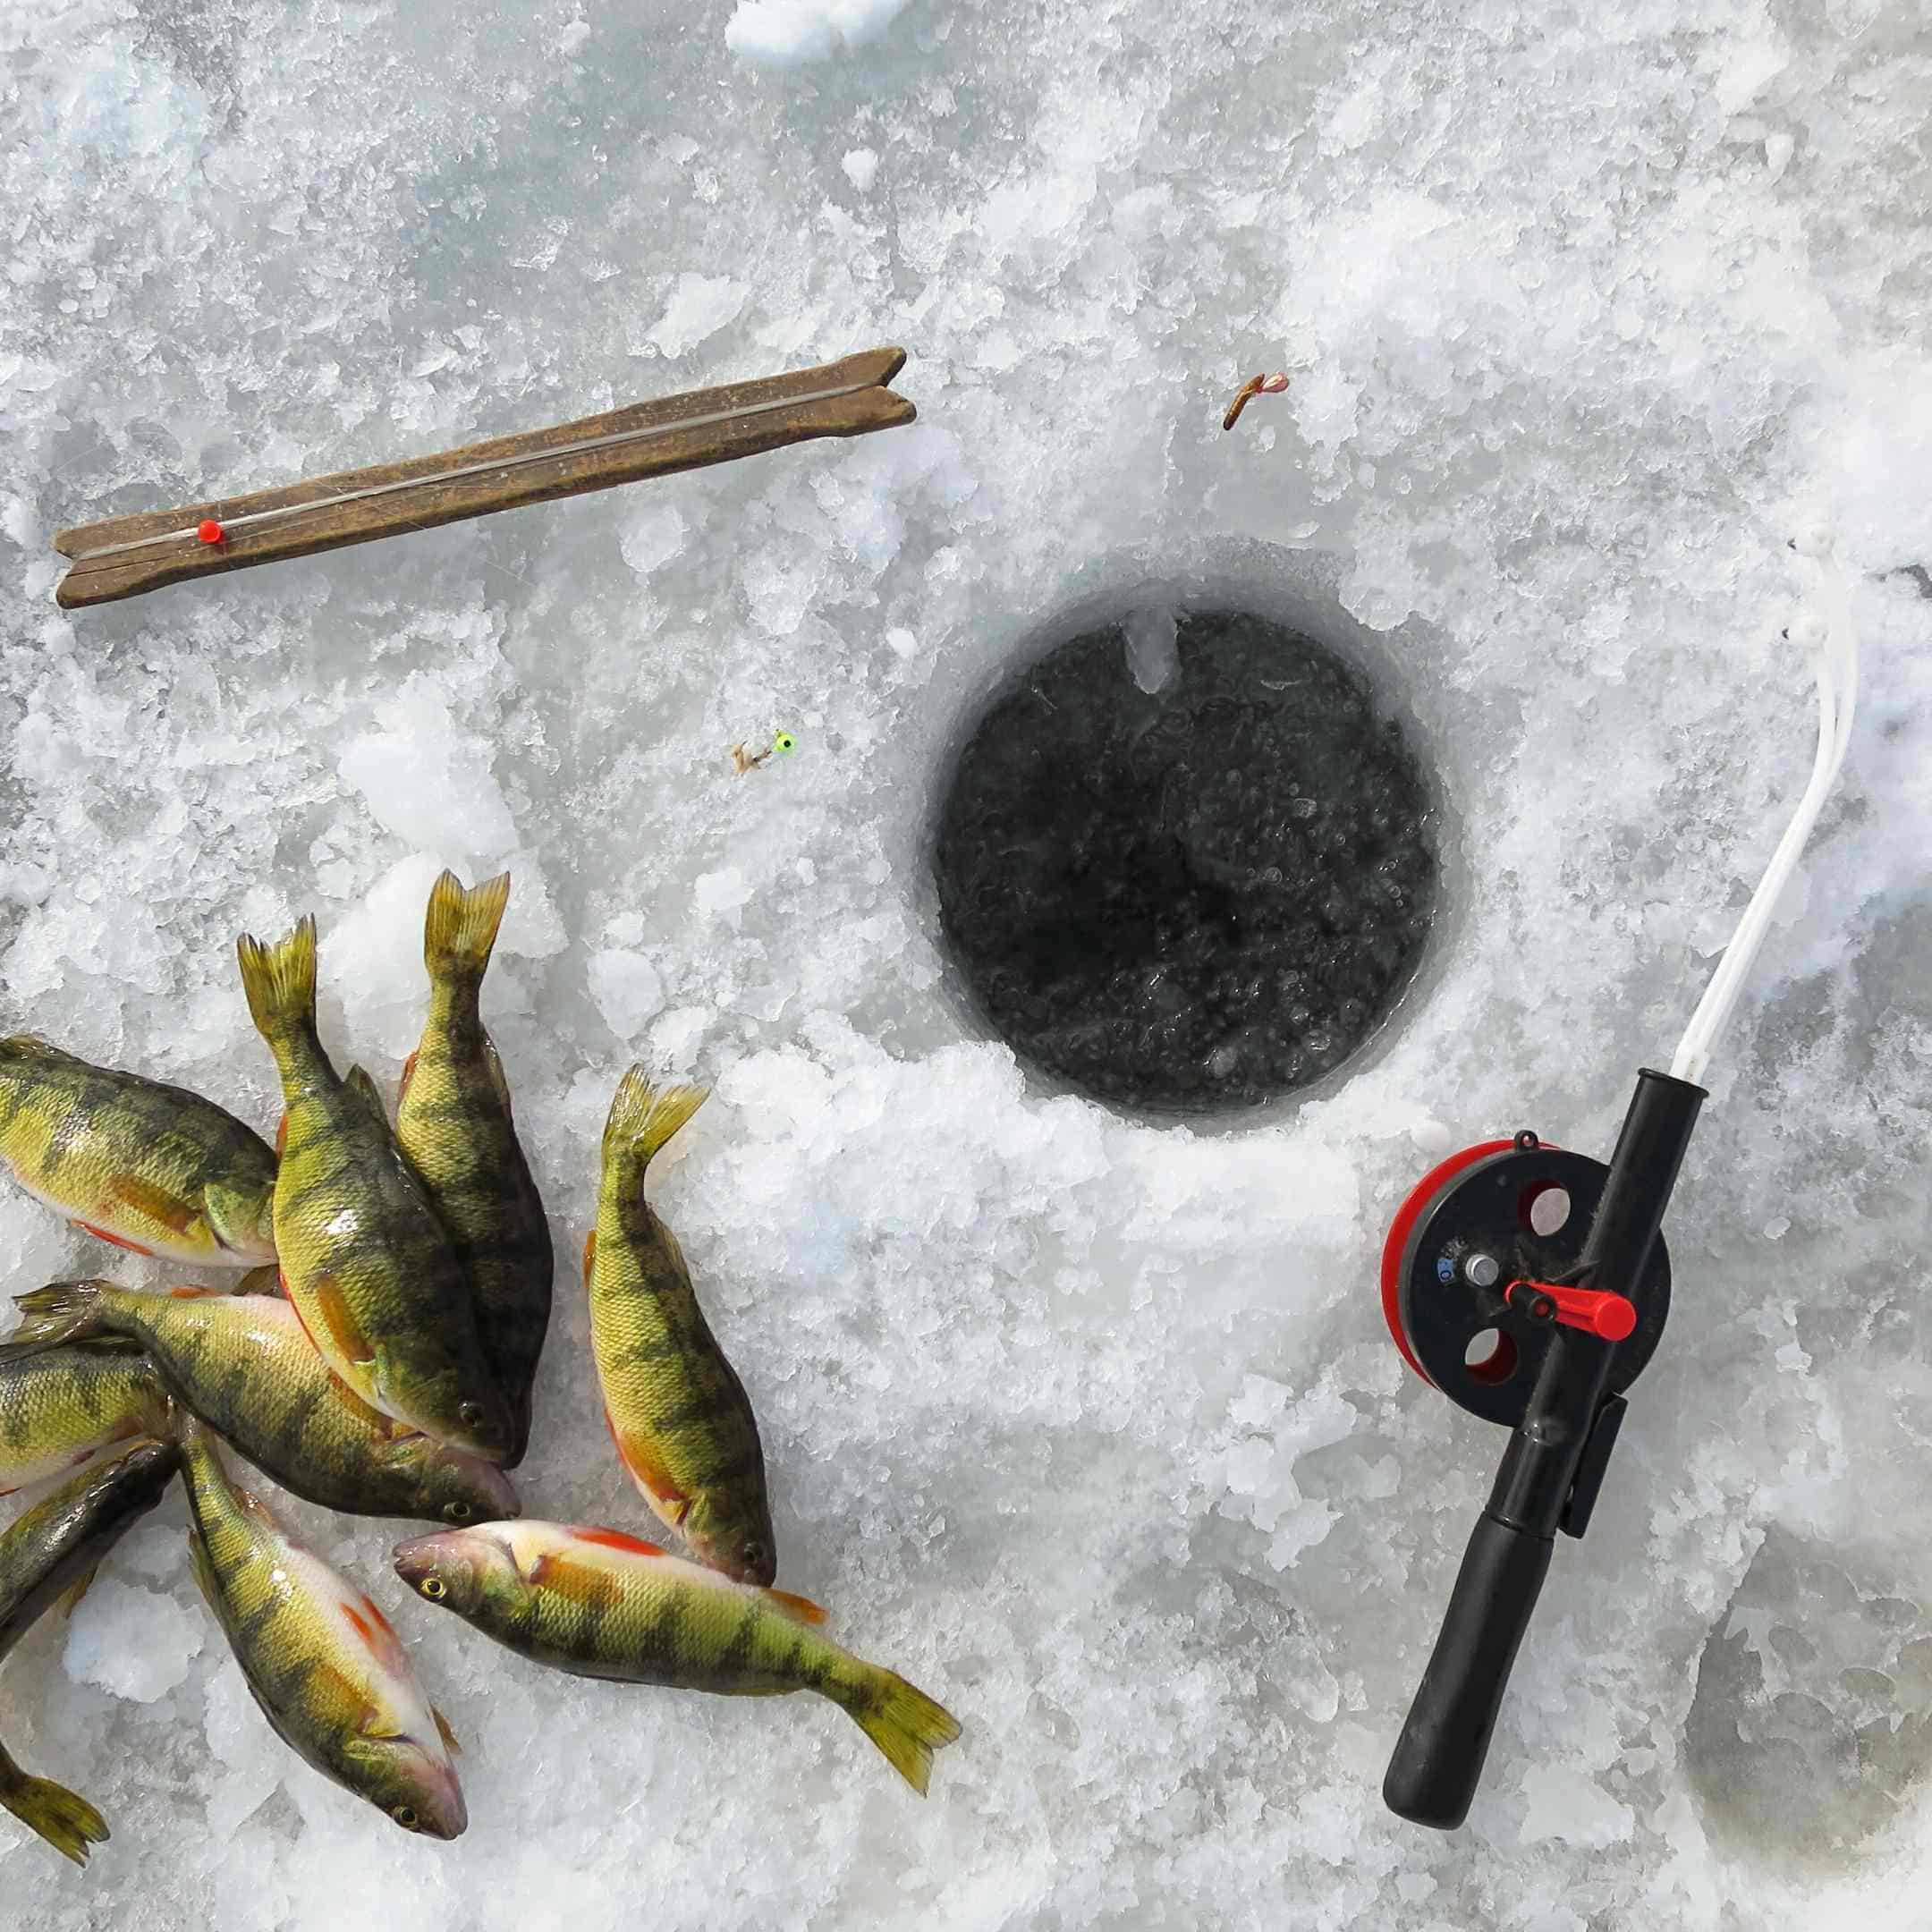 Keeping Fish Fresh On Ice